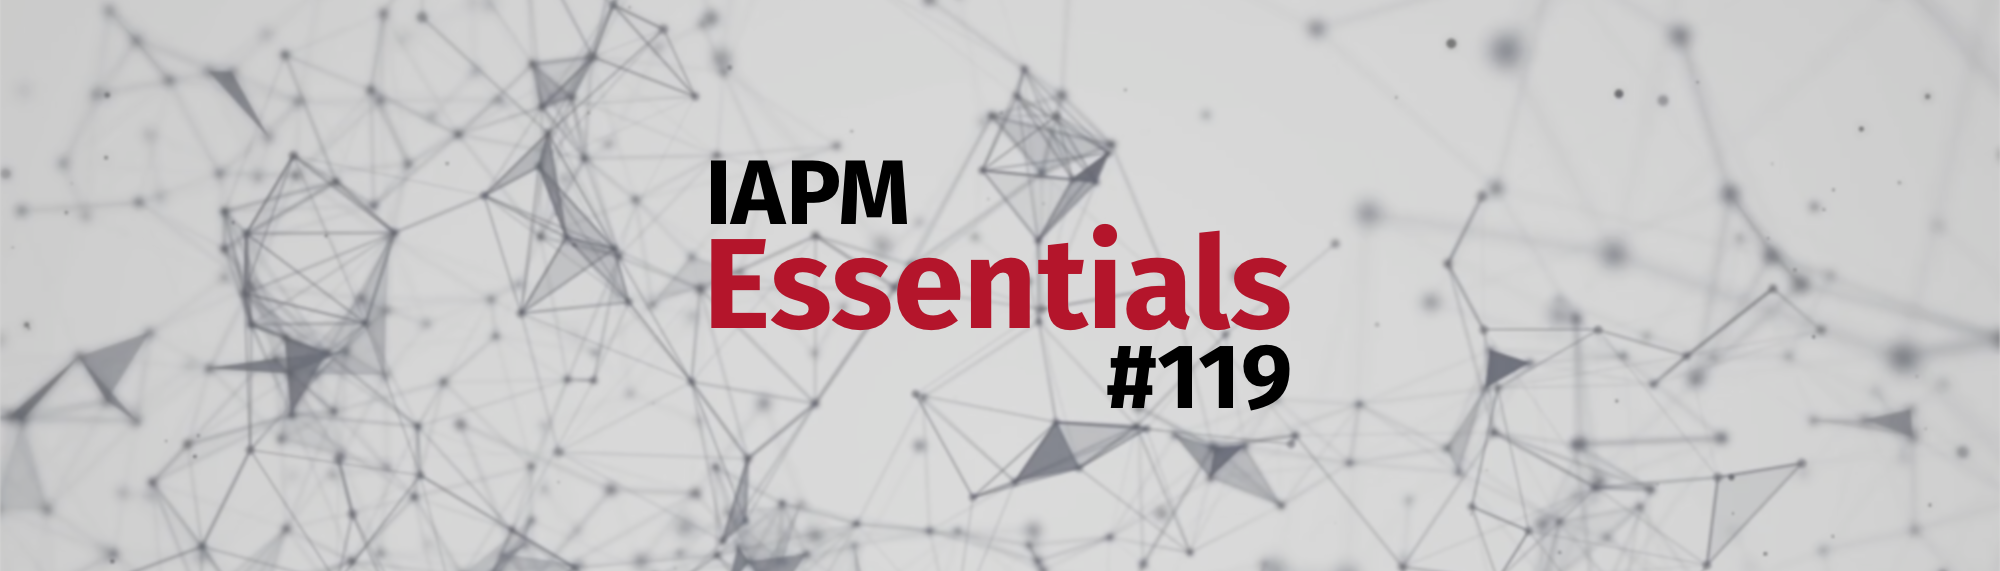 IAPM Essentials #119 - PM Neuigkeiten | IAPM